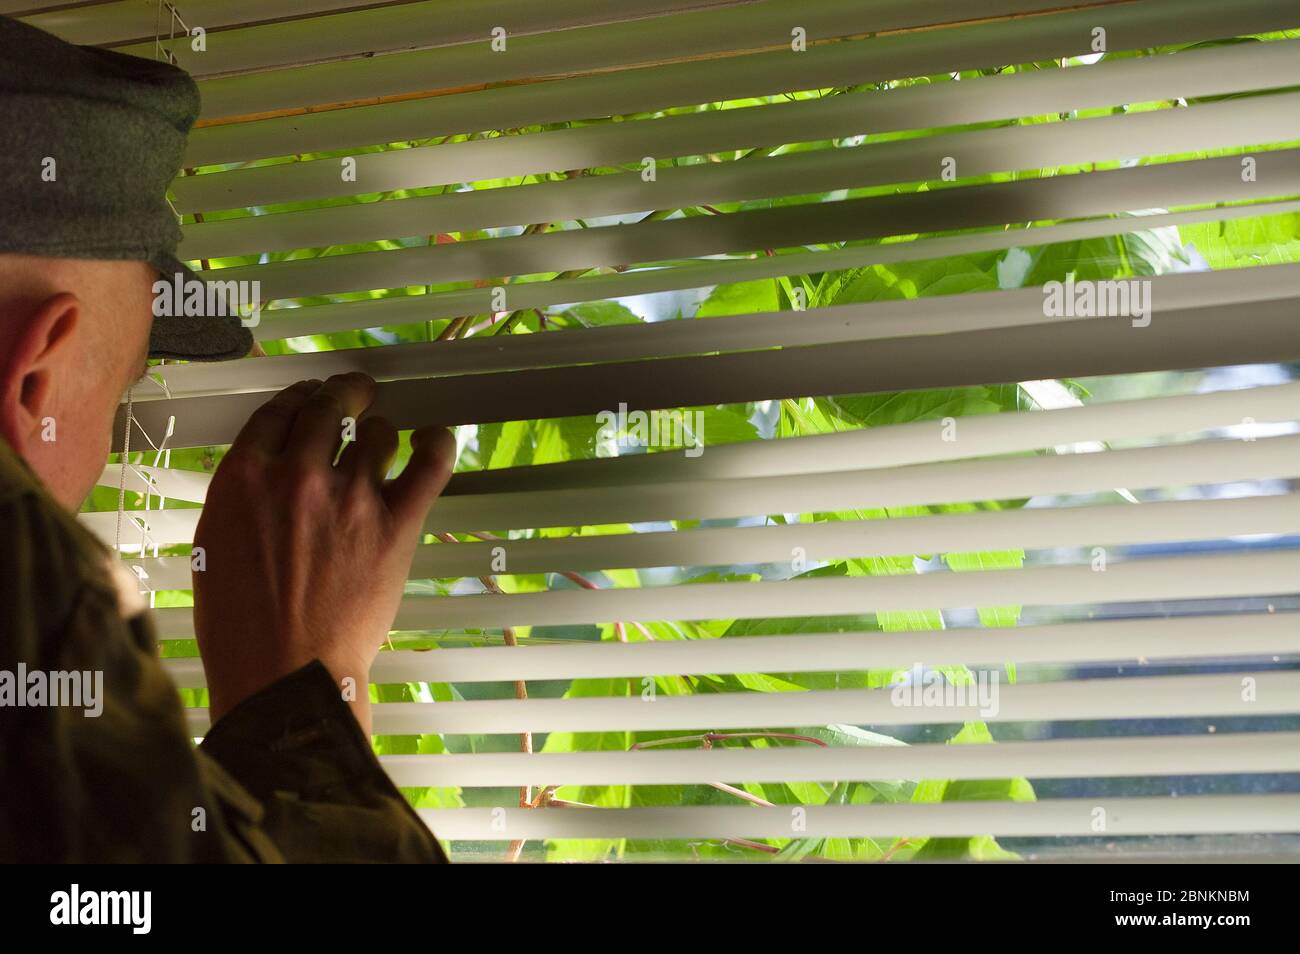 Man in uniform peeking throngh the window blinds, indoor closeup Stock Photo